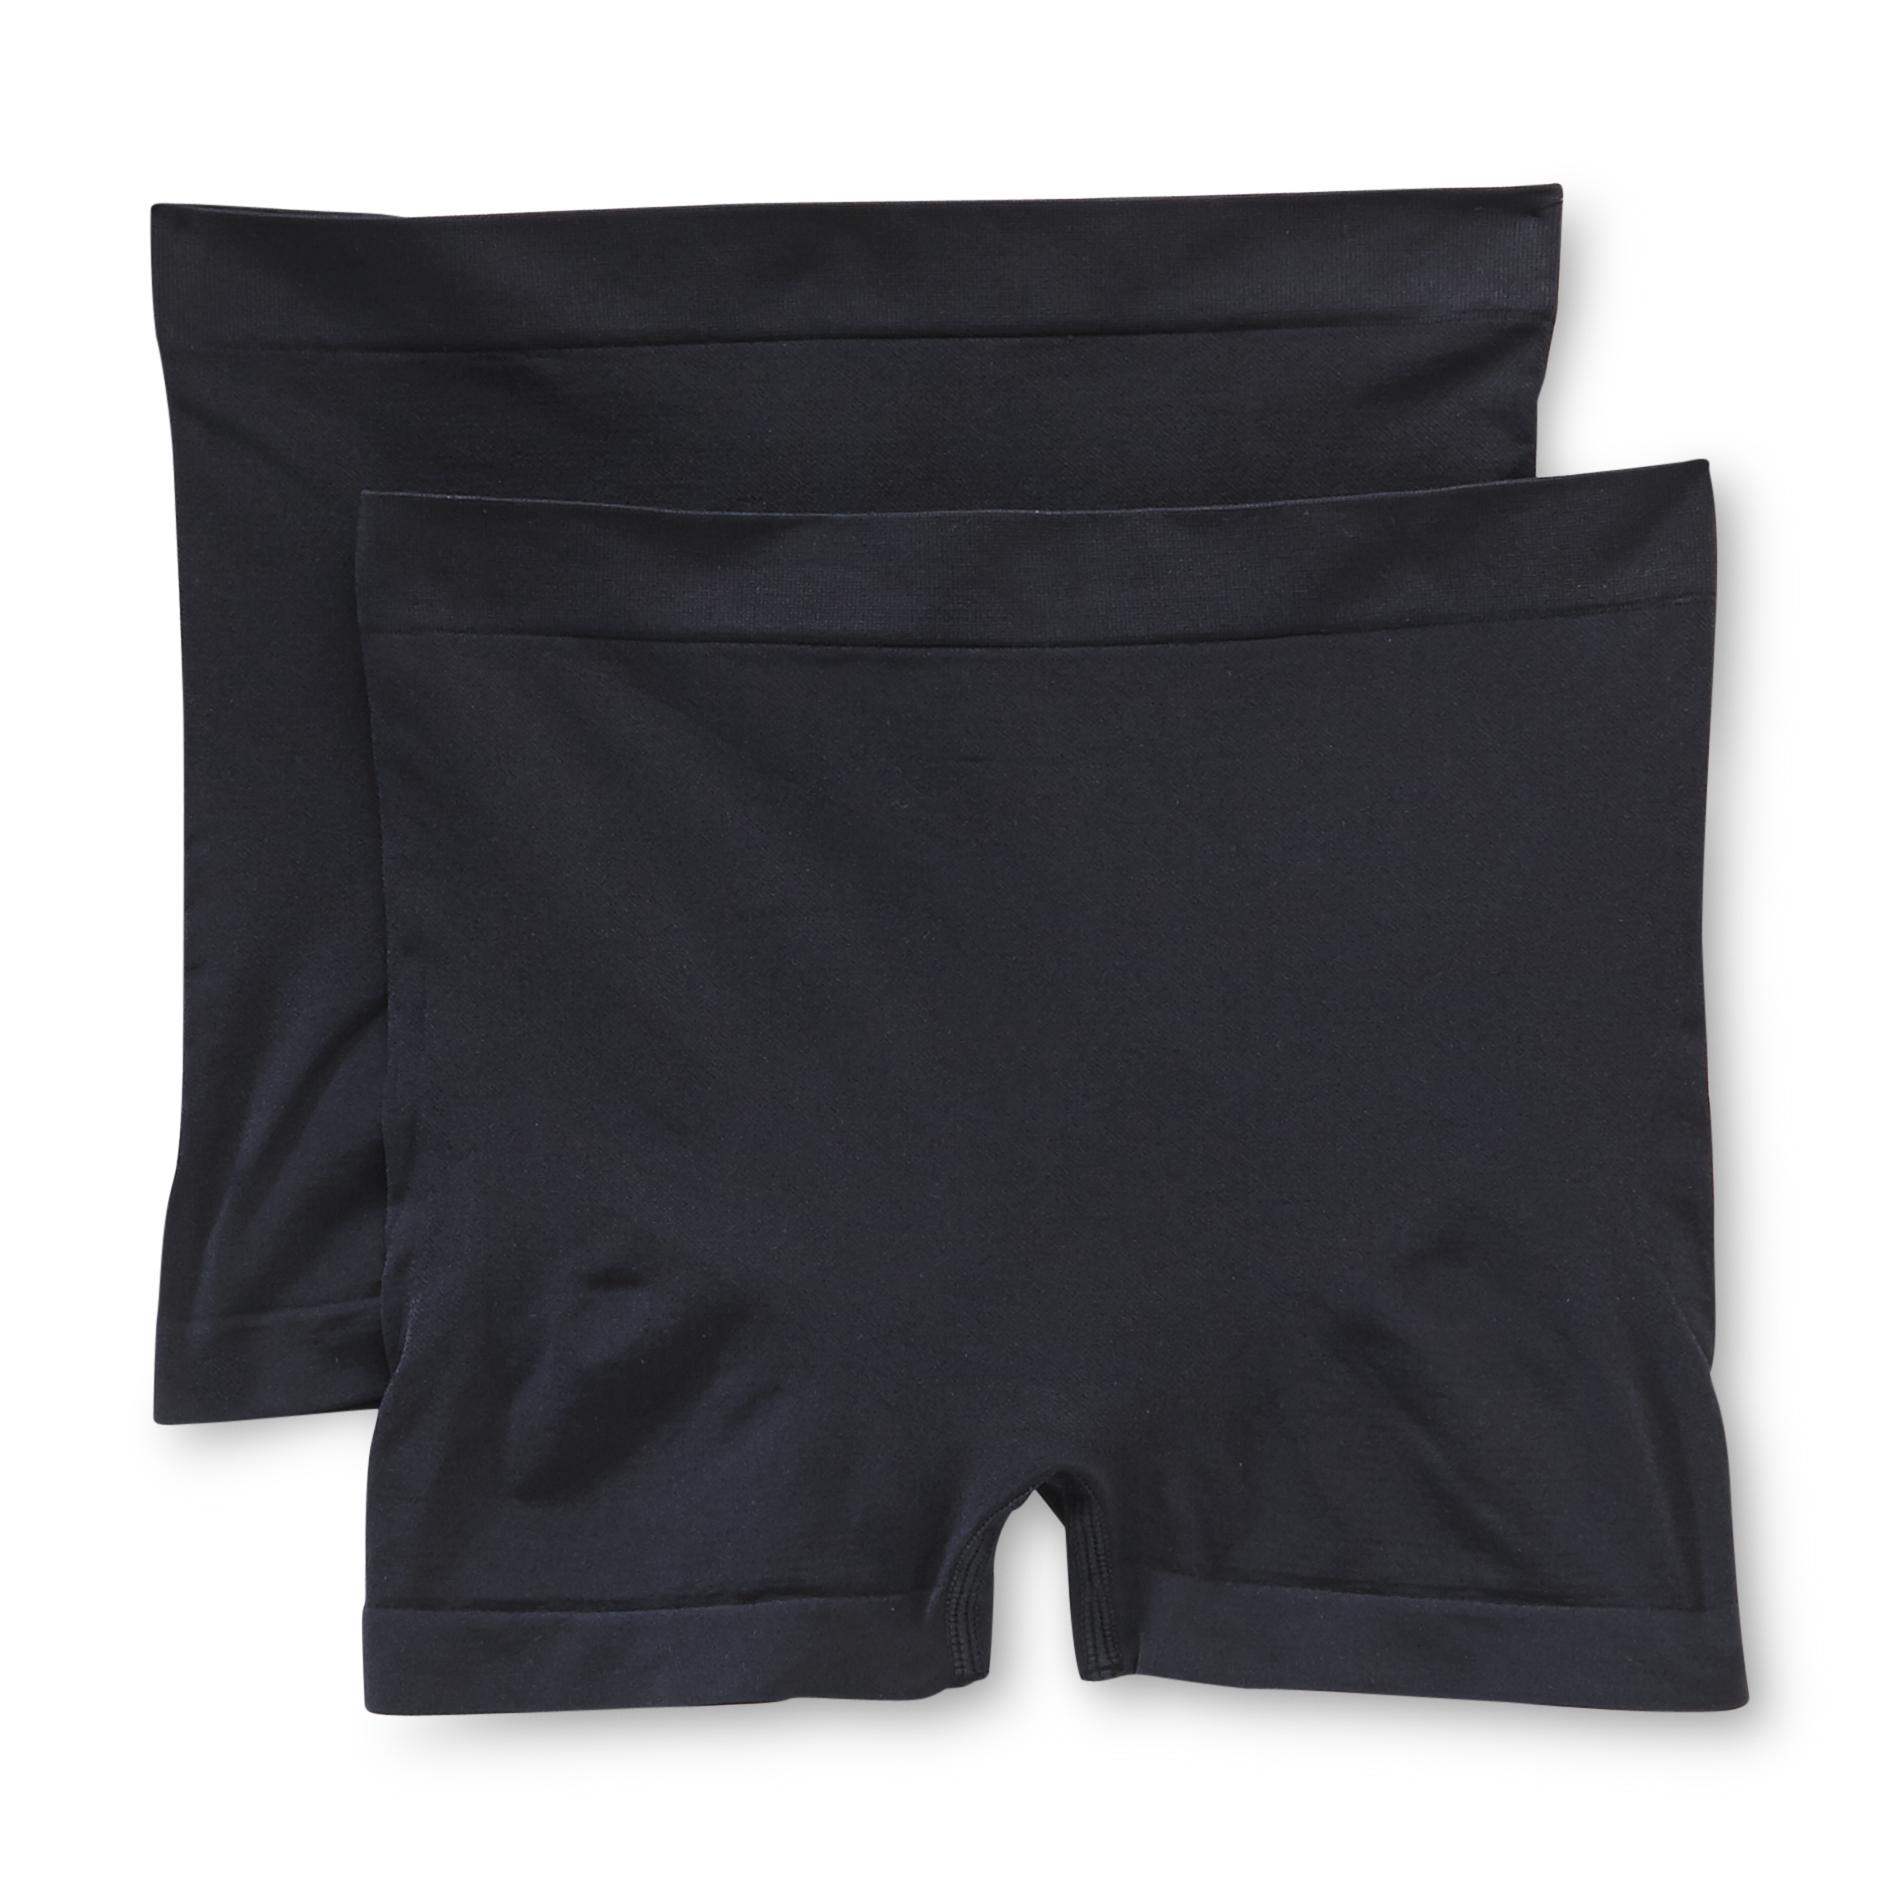 Maidenform Women's 2-Pack Everyday Control Boy Short Panties